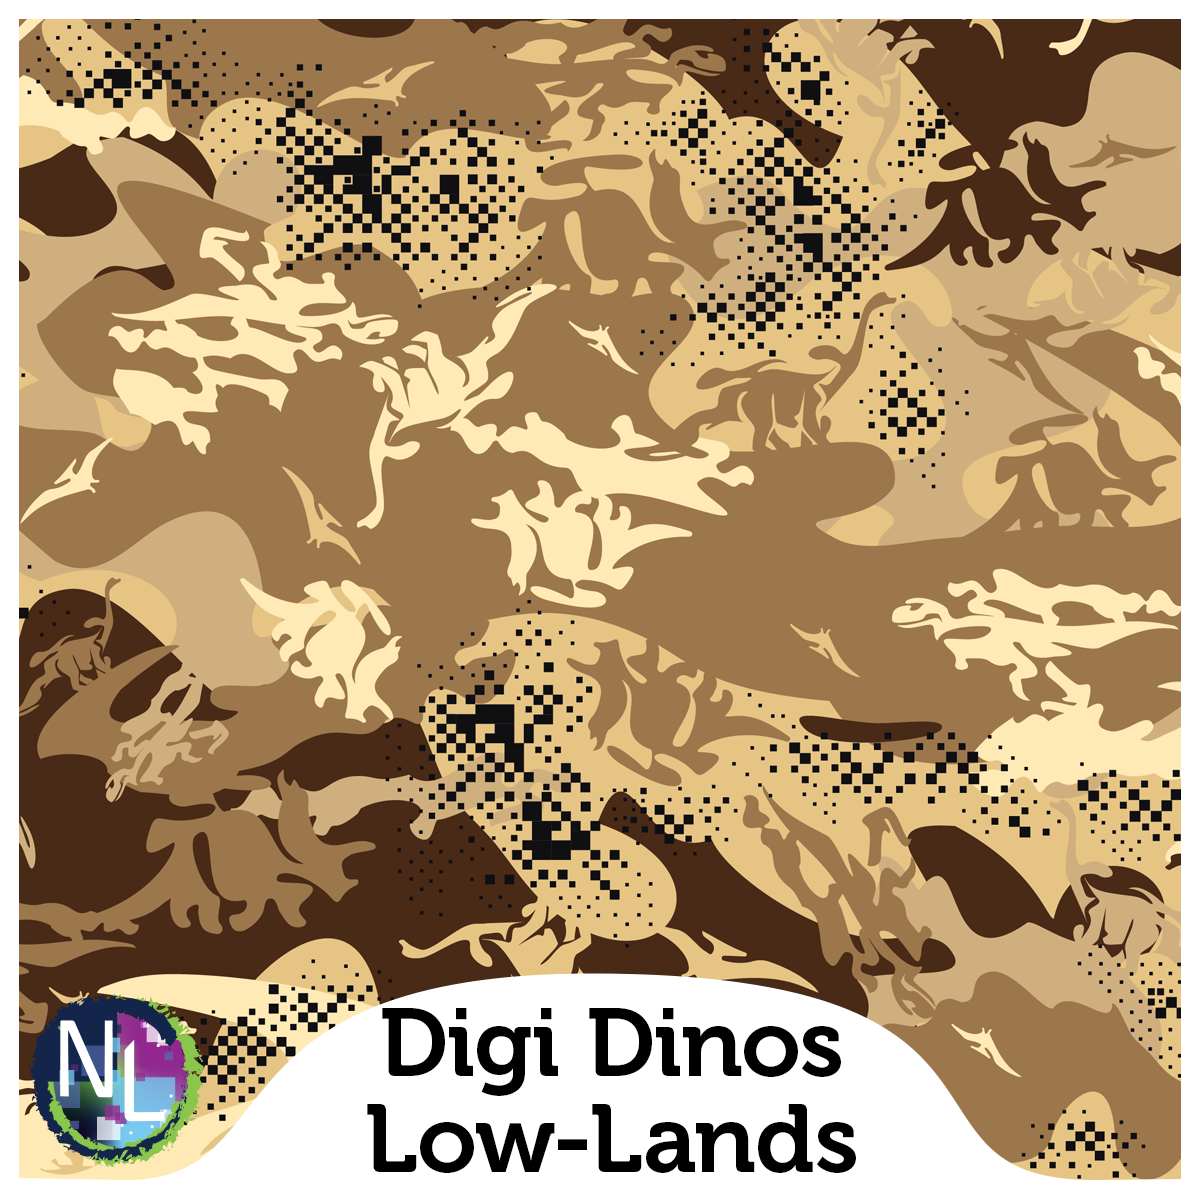 Digi Dinos Low-Lands